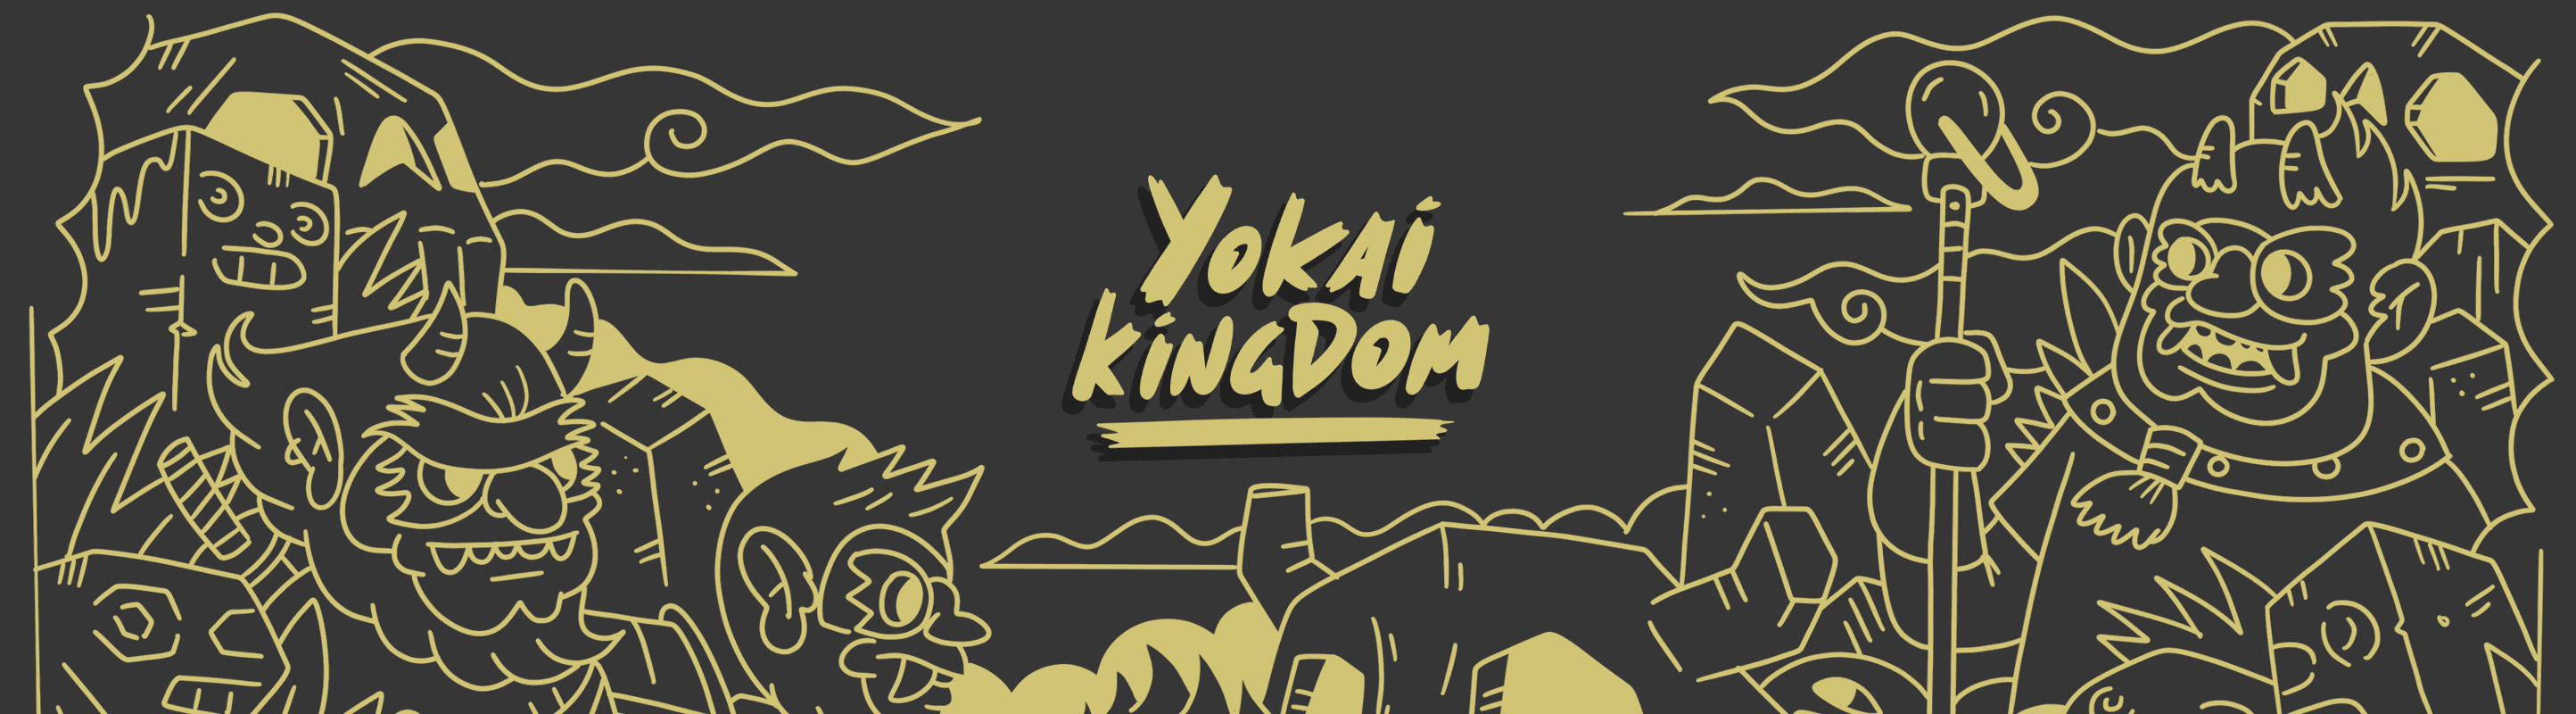 Yokai Kingdom Collection